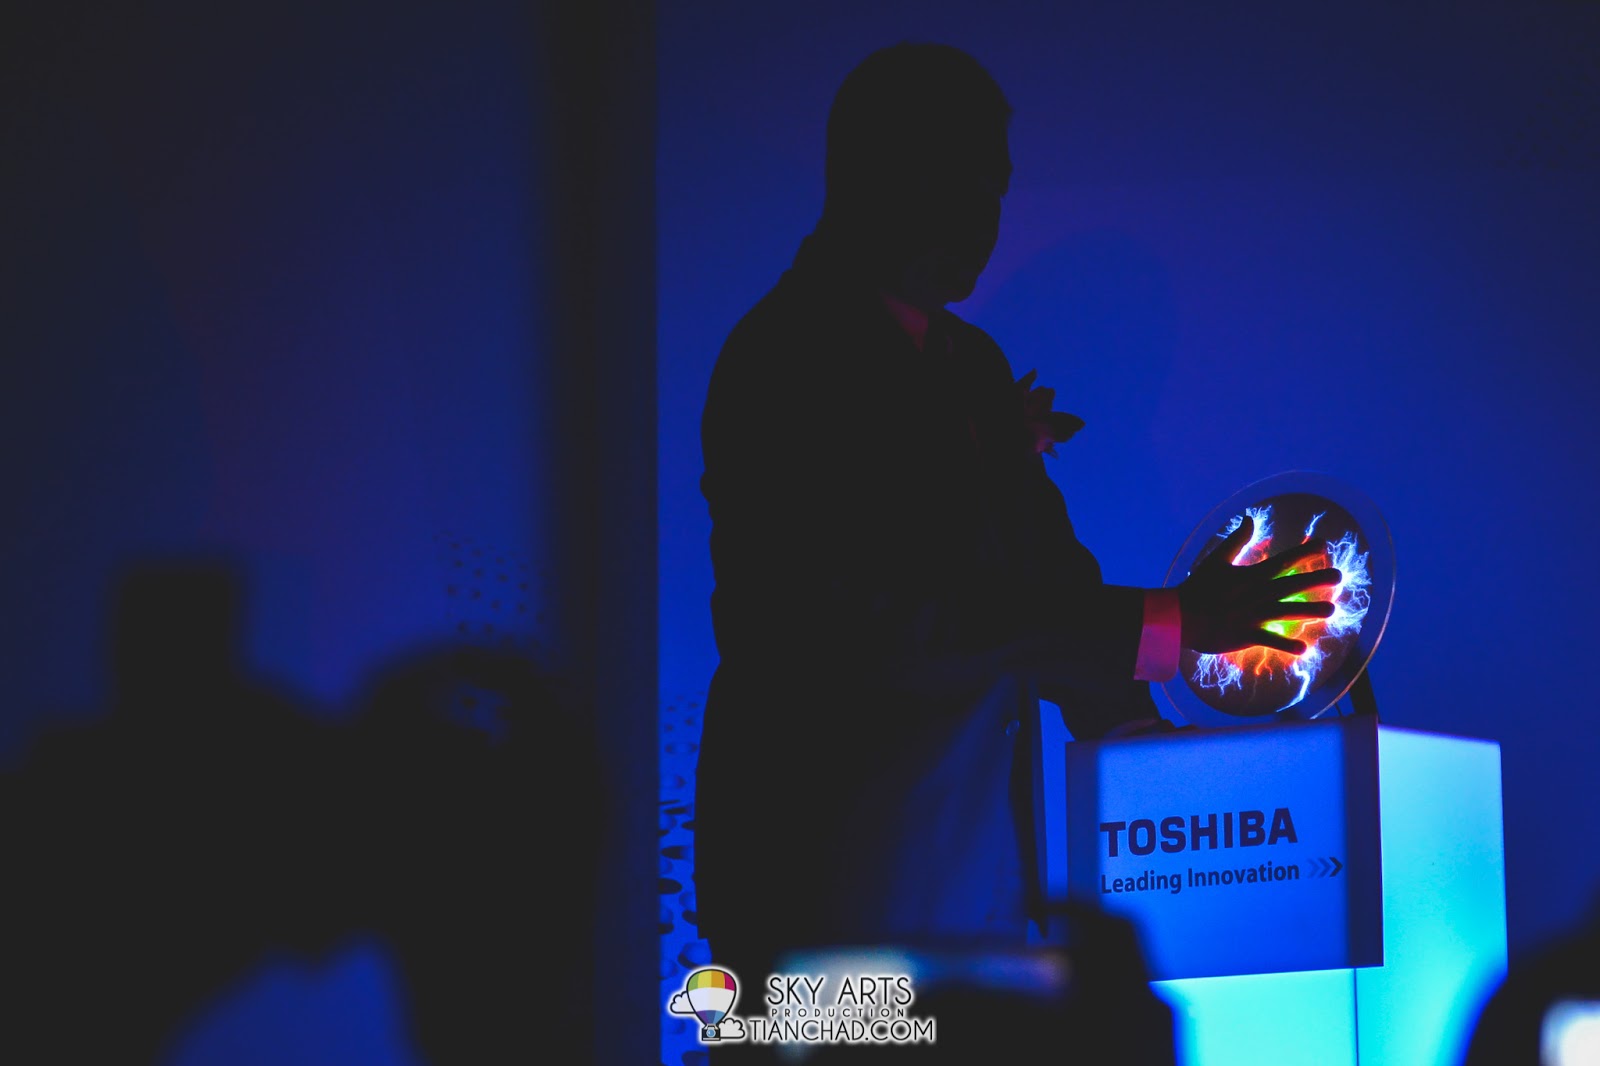 Mr Hitoshi Katayama launched Toshiba latest innovative products with single touch 